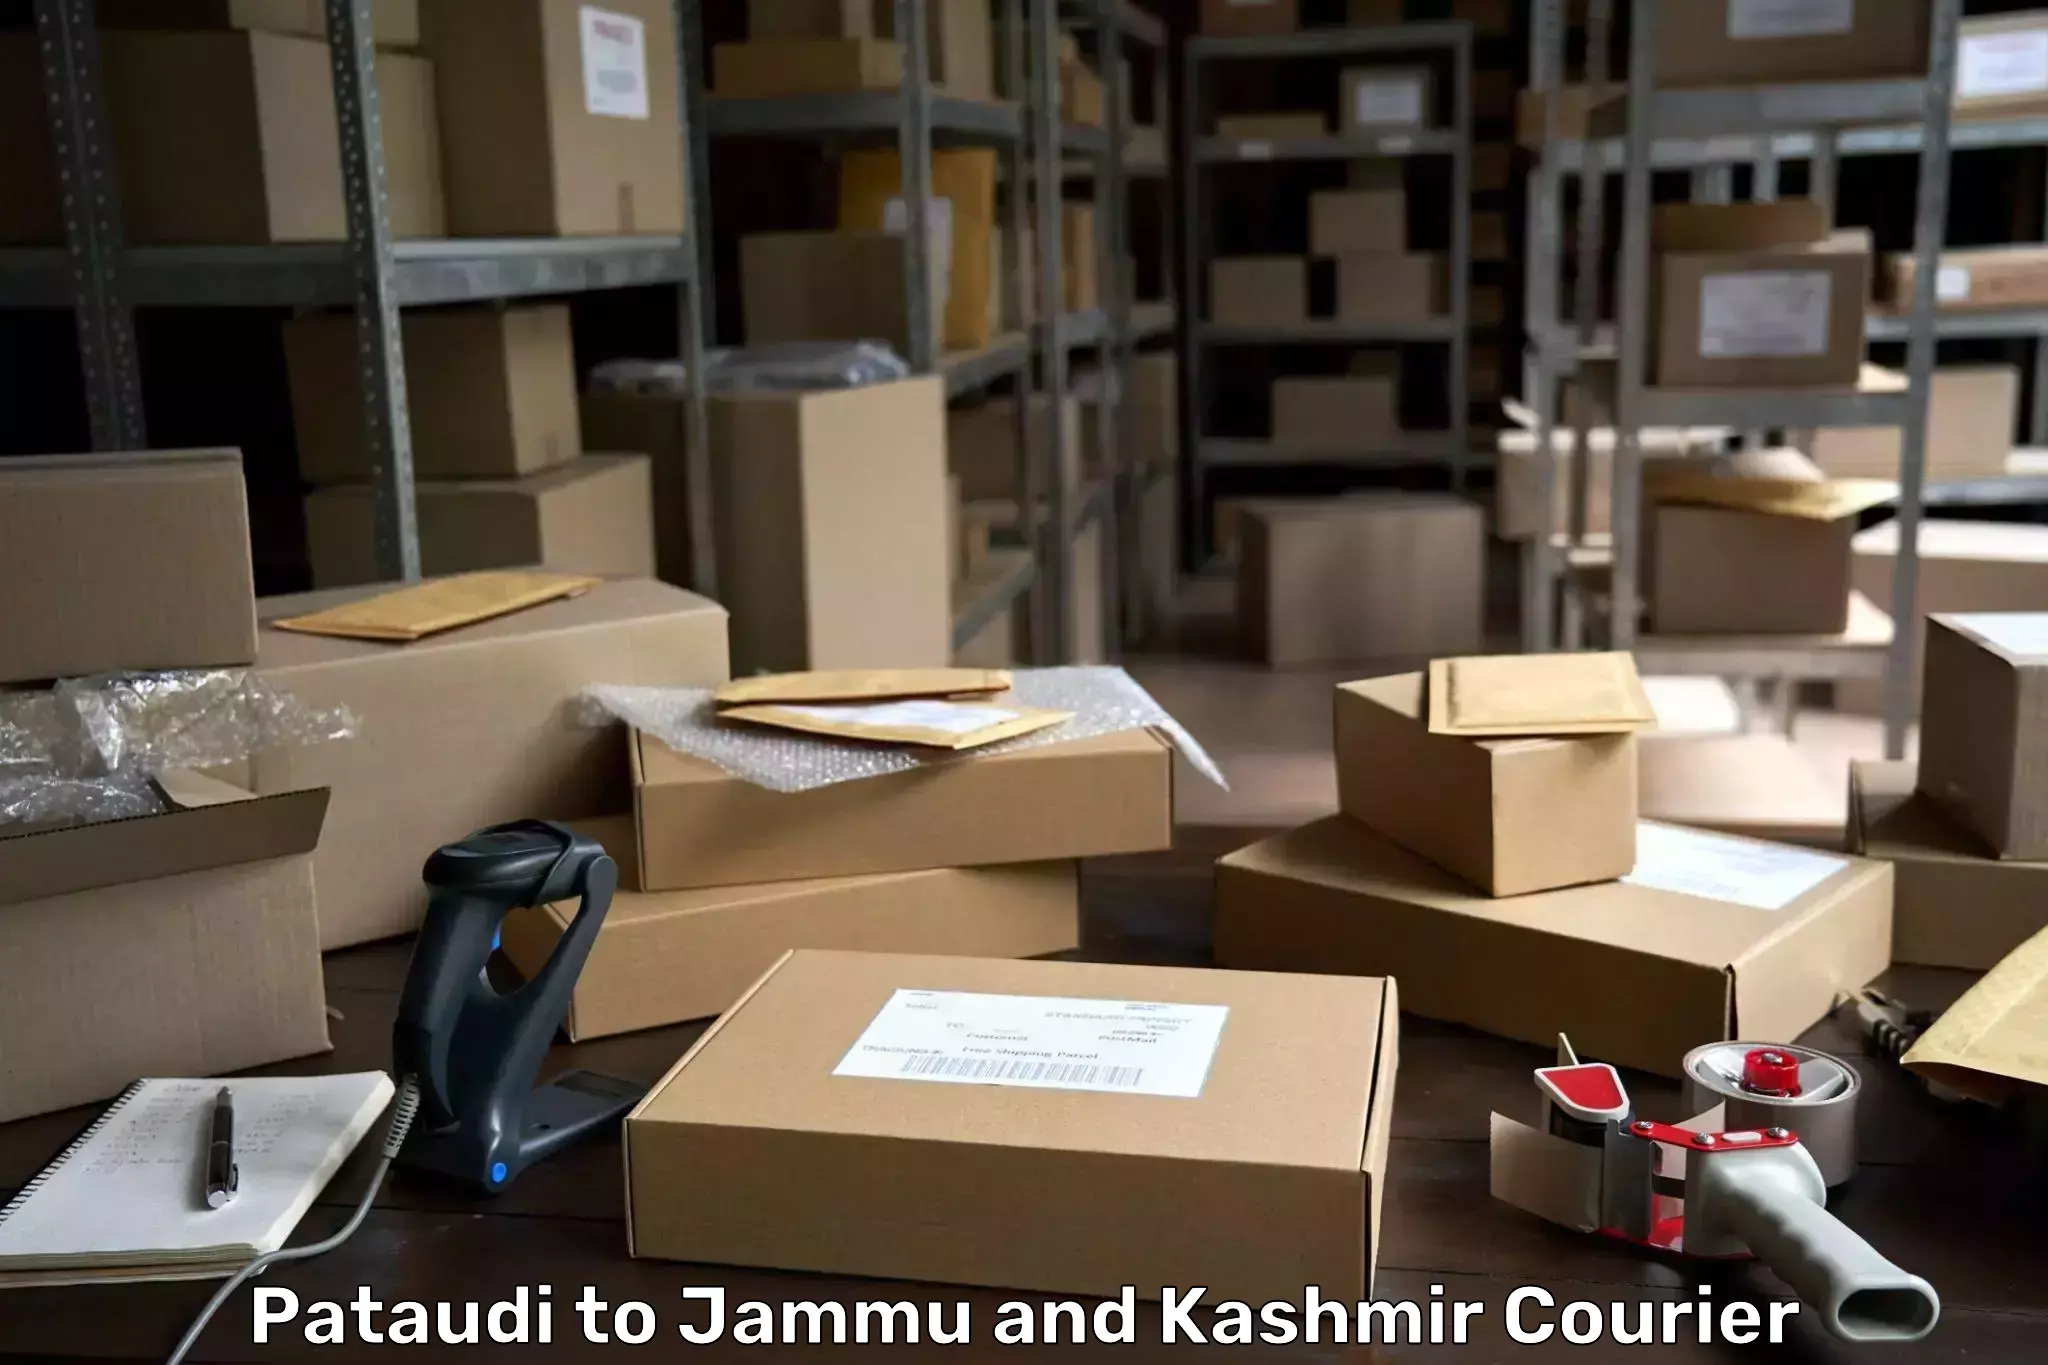 Courier service comparison Pataudi to Jammu and Kashmir